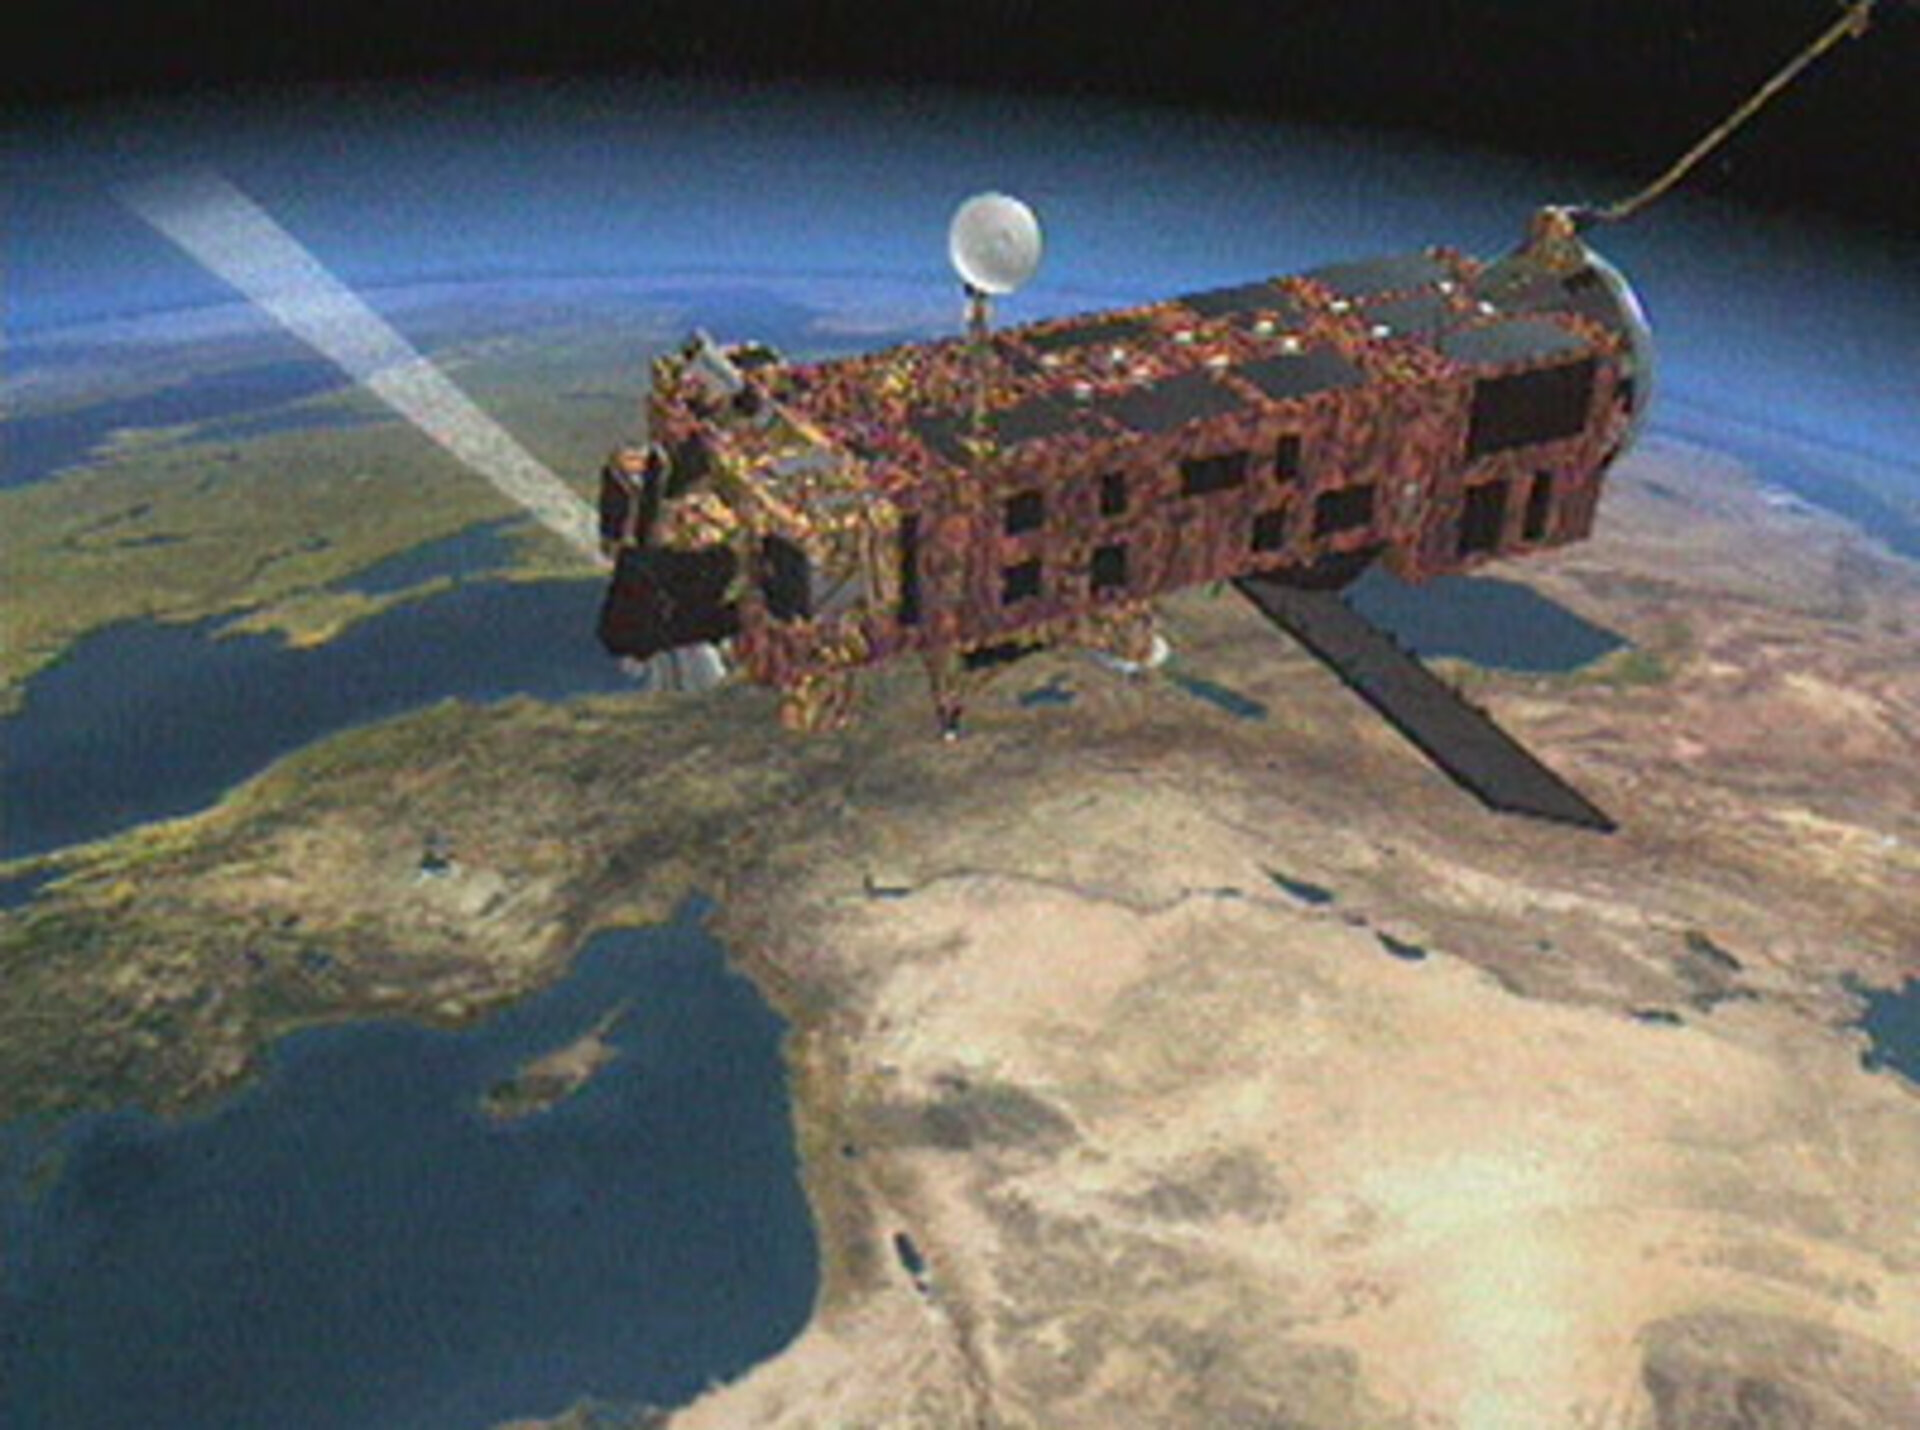 ESA's milieusatelliet Envisat